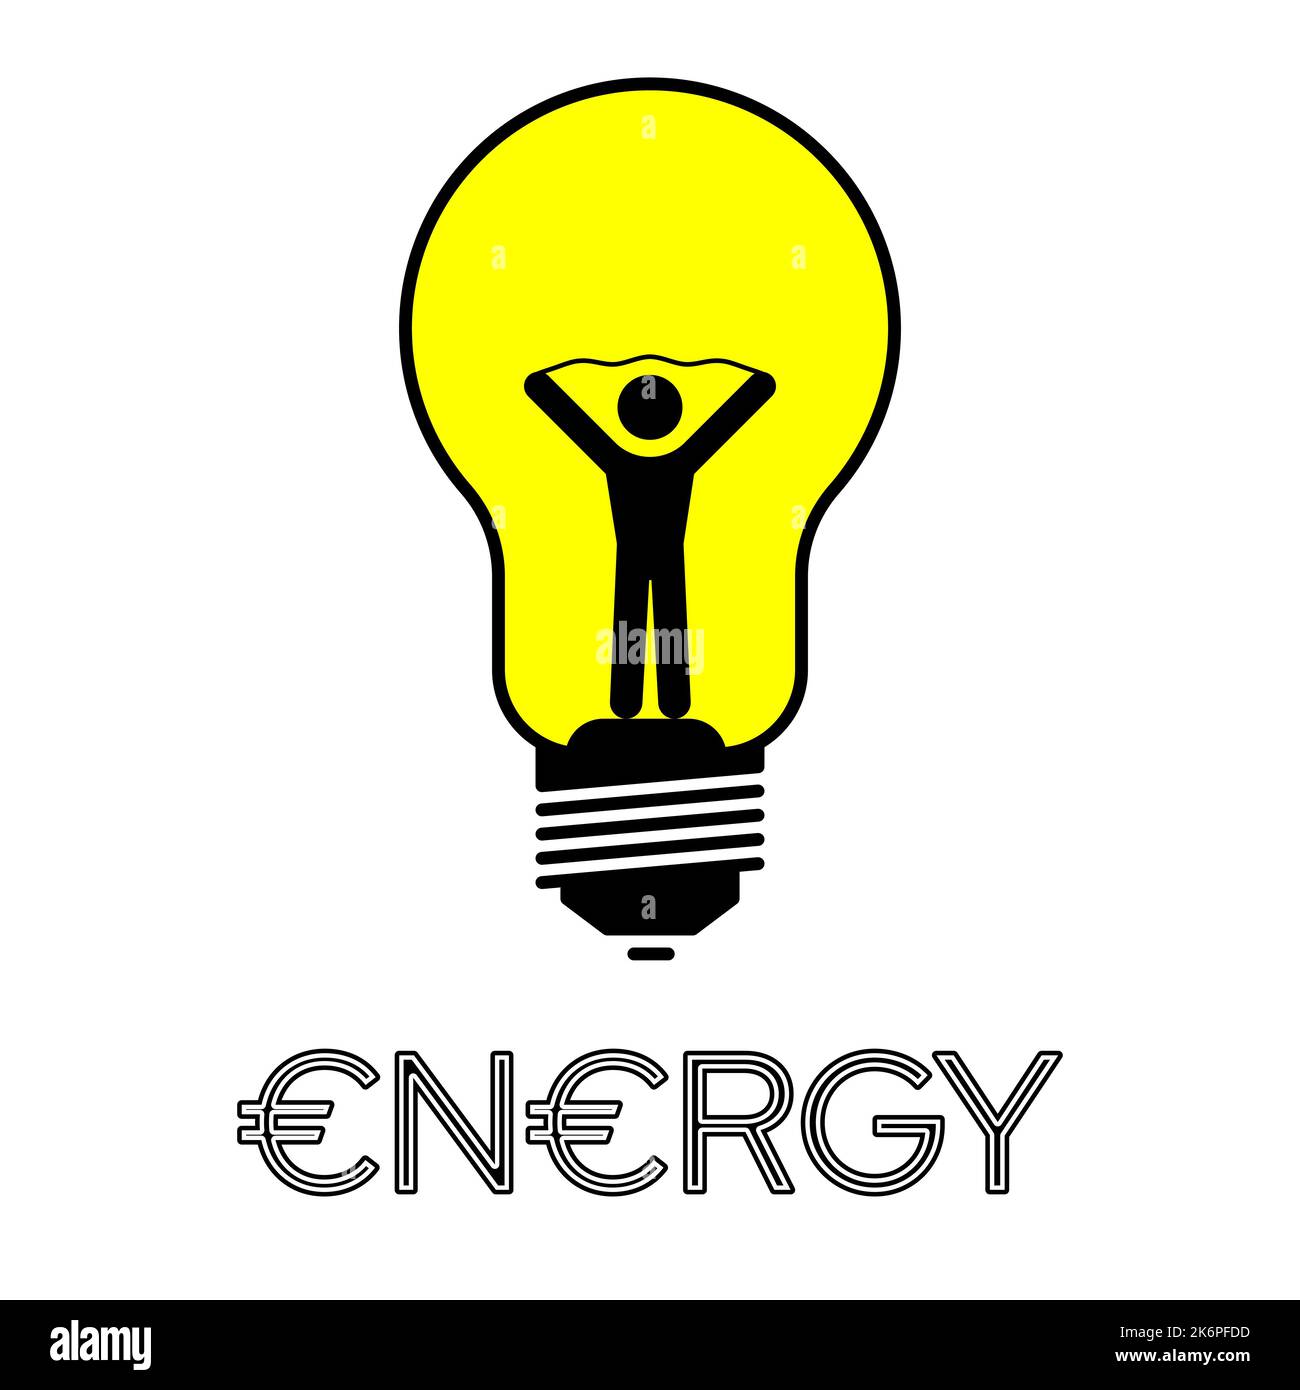 Vitality, energy, bright idea concept. Human icon inside of a lightbulb. Vector illustration Stock Vector